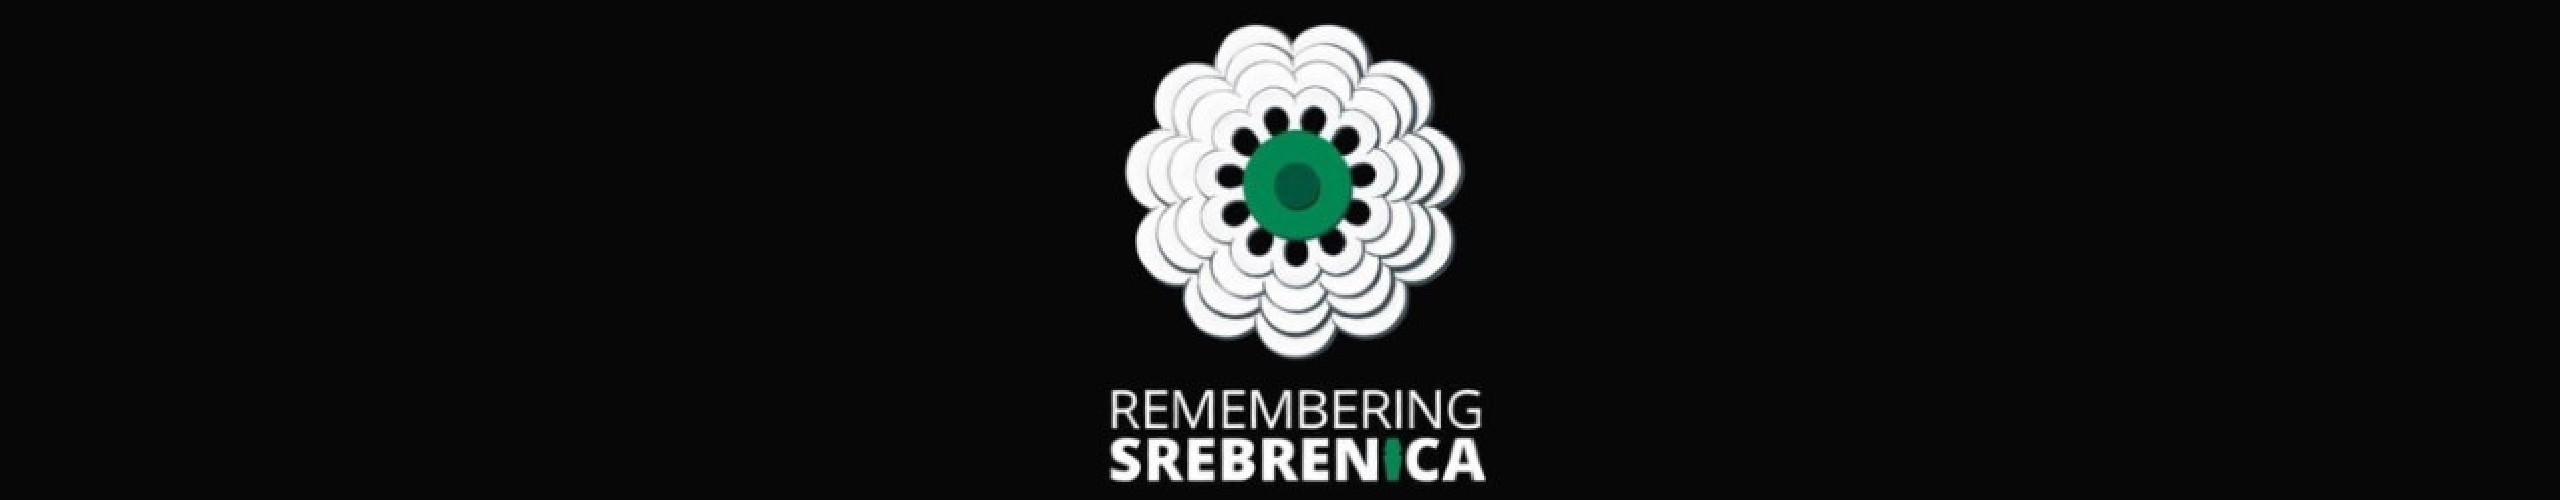 Remembering Srebrenica panel background